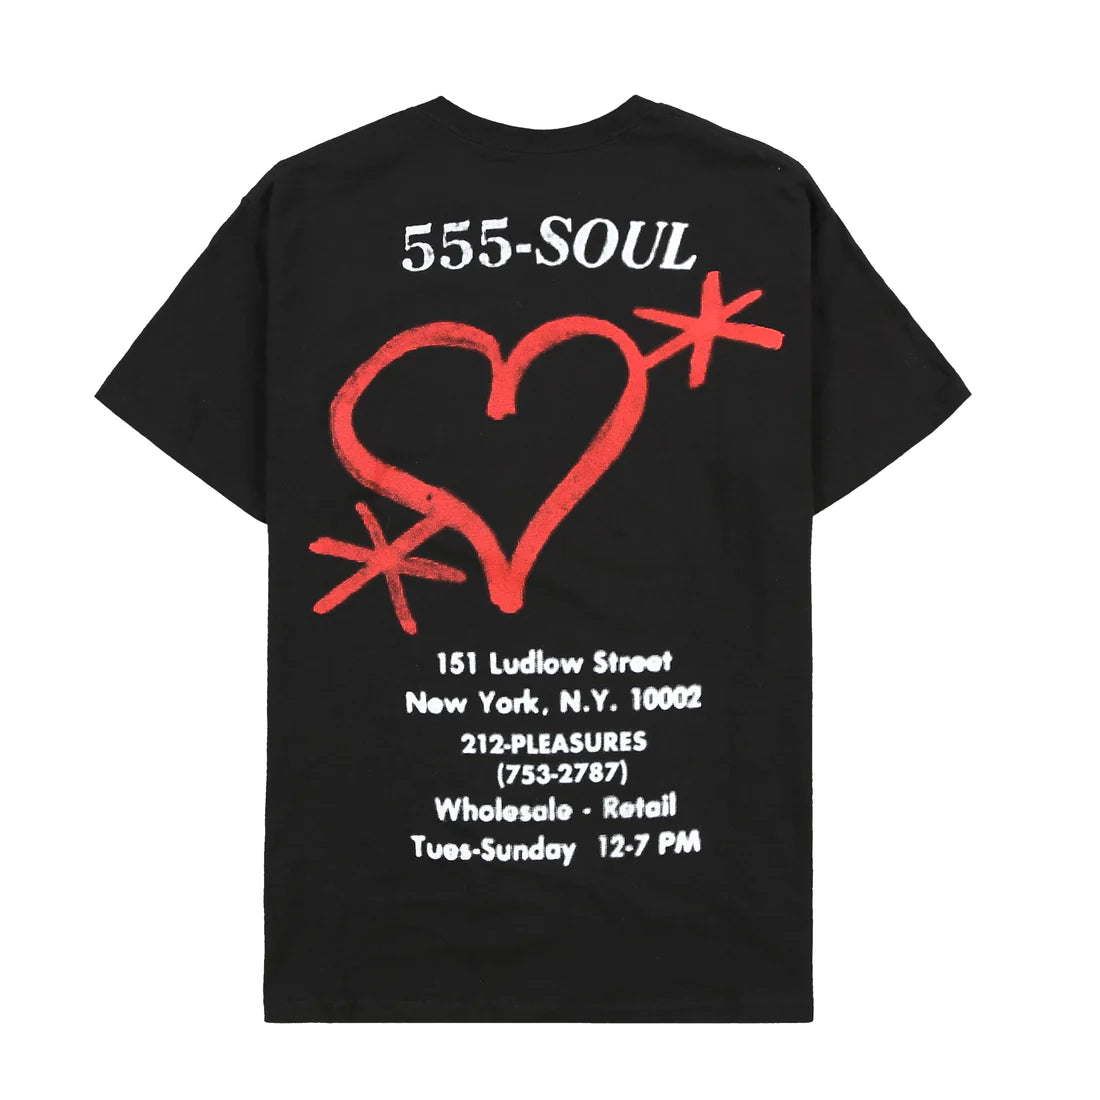 Triple 5 Soul x Pleasures Biz Card T-Shirt